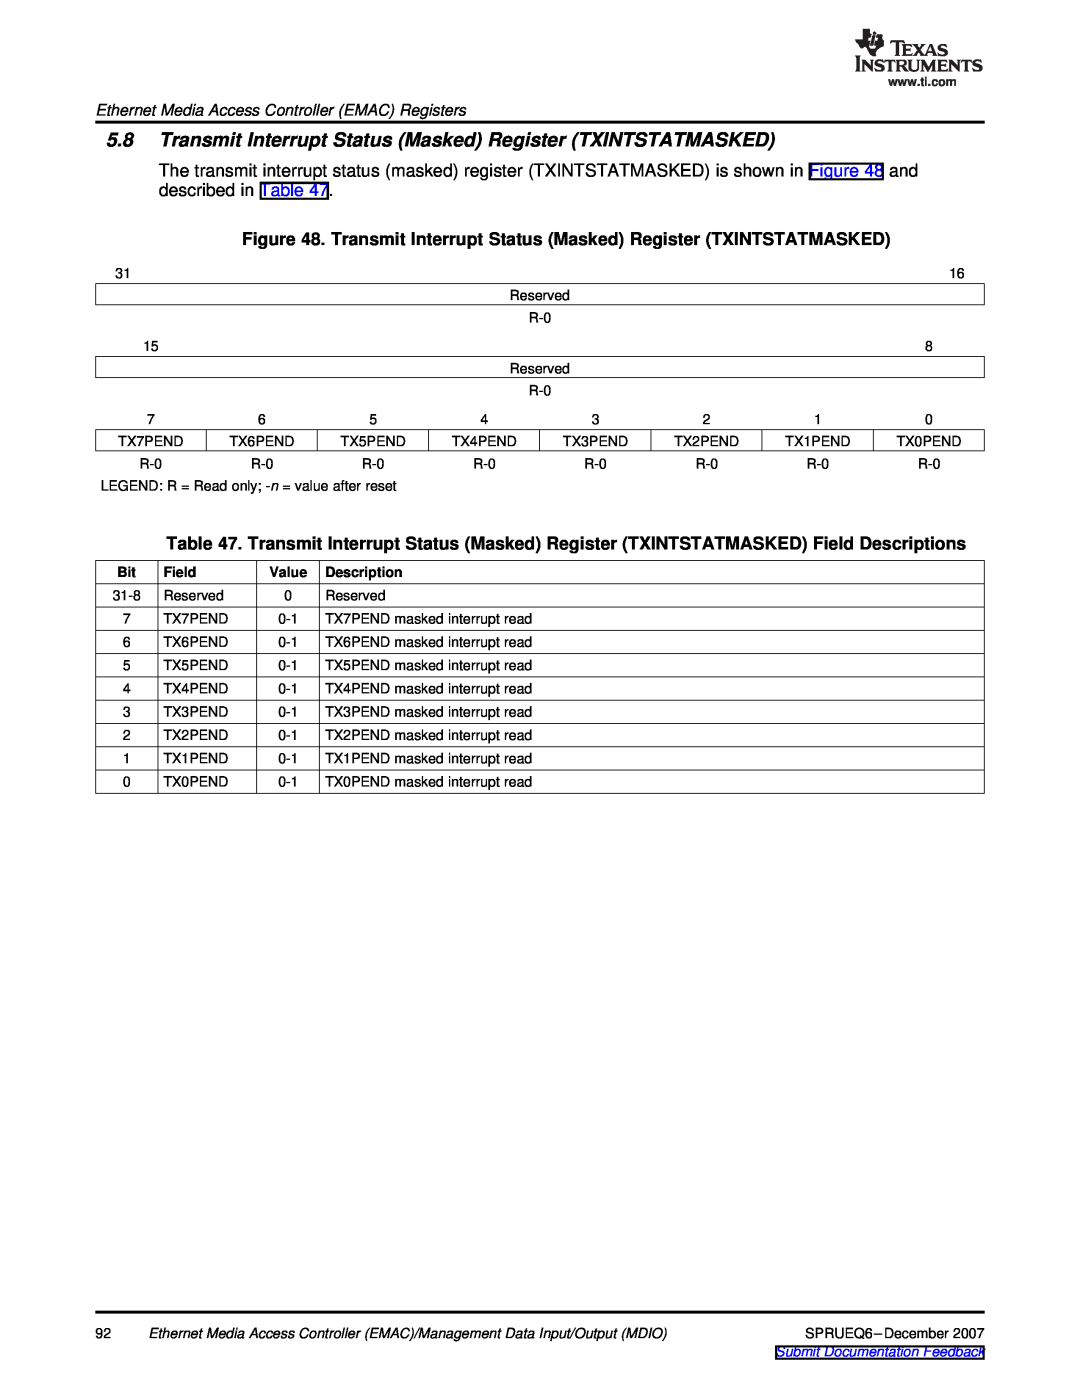 Texas Instruments TMS320DM646x manual Transmit Interrupt Status Masked Register TXINTSTATMASKED, Field, Value, Description 